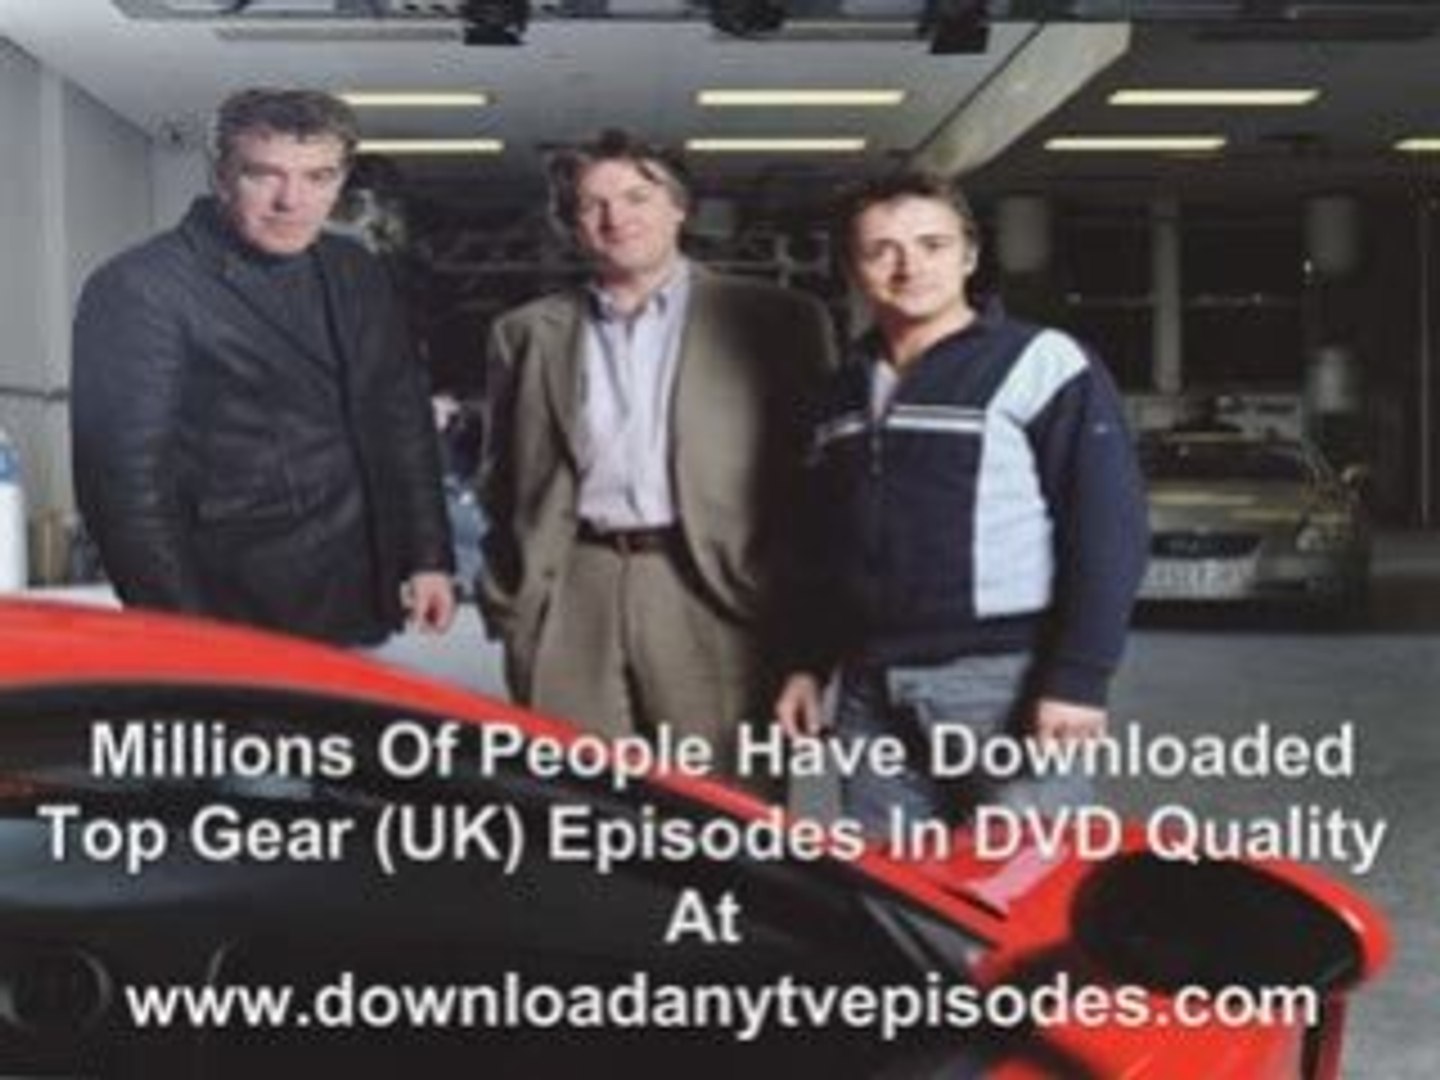 Ulempe bandage klaver Download Top Gear Episodes Online - video Dailymotion